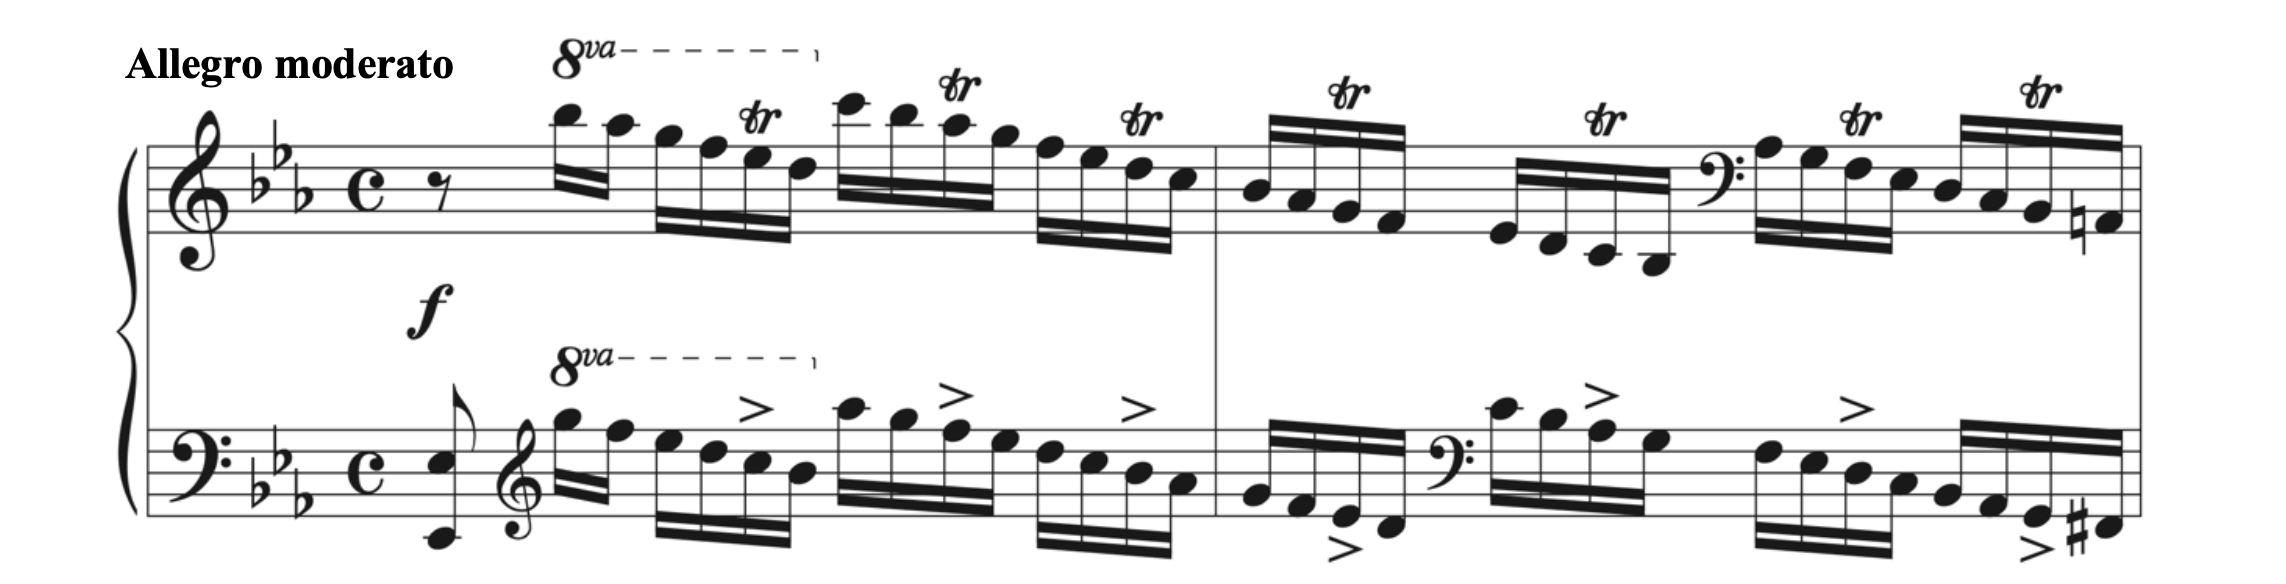 Score for opening of Shoemahnowska, Prelude No. 1